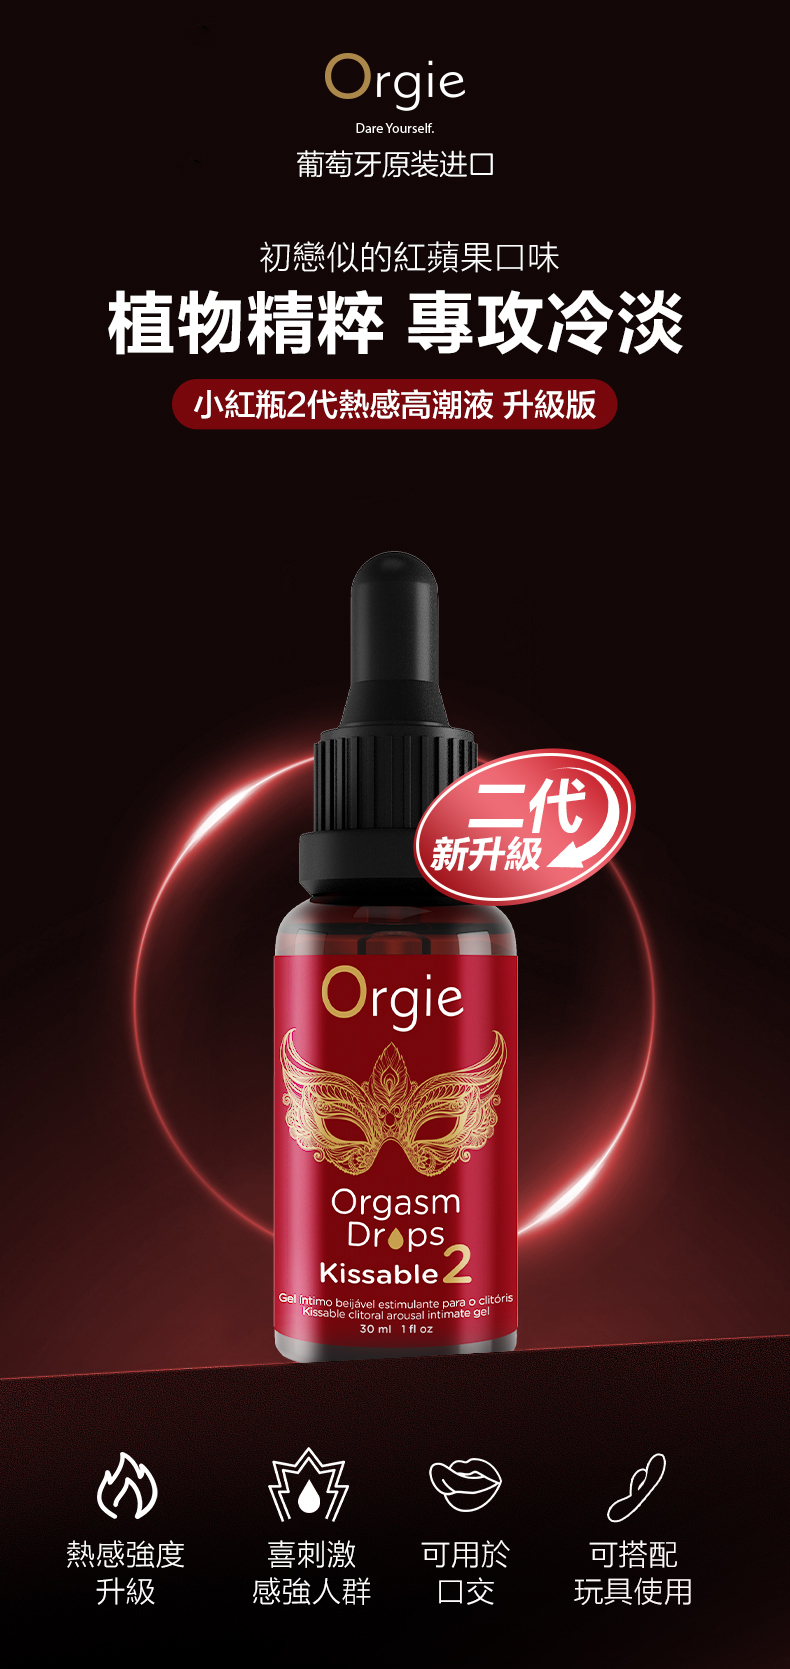 Orgie Orgasm Drops Kissable 2 - Adult Loving